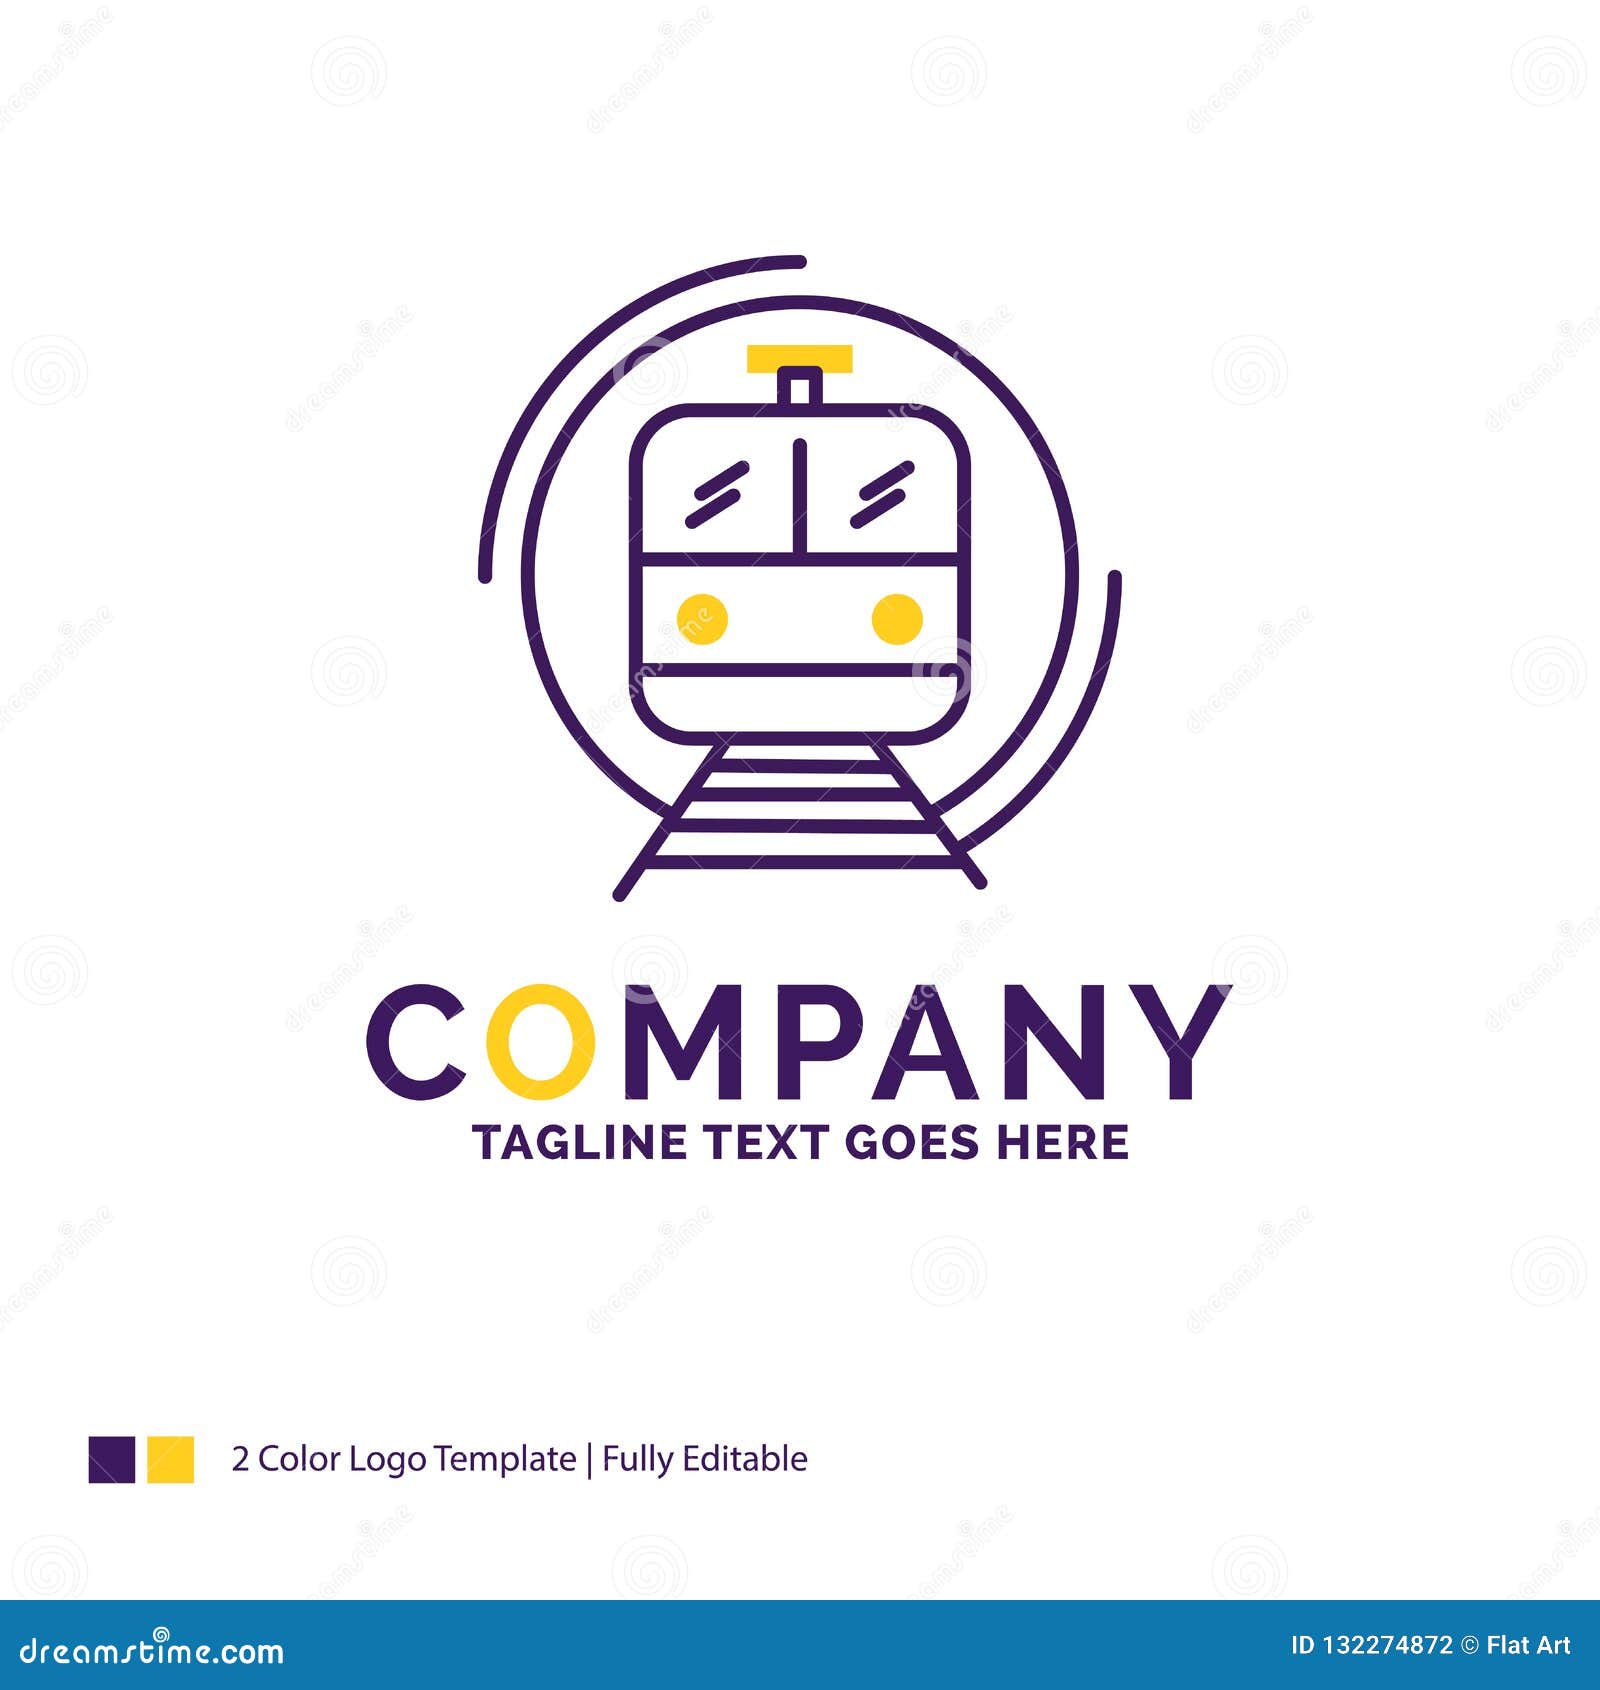 company name logo  for metro, train, smart, public, transp